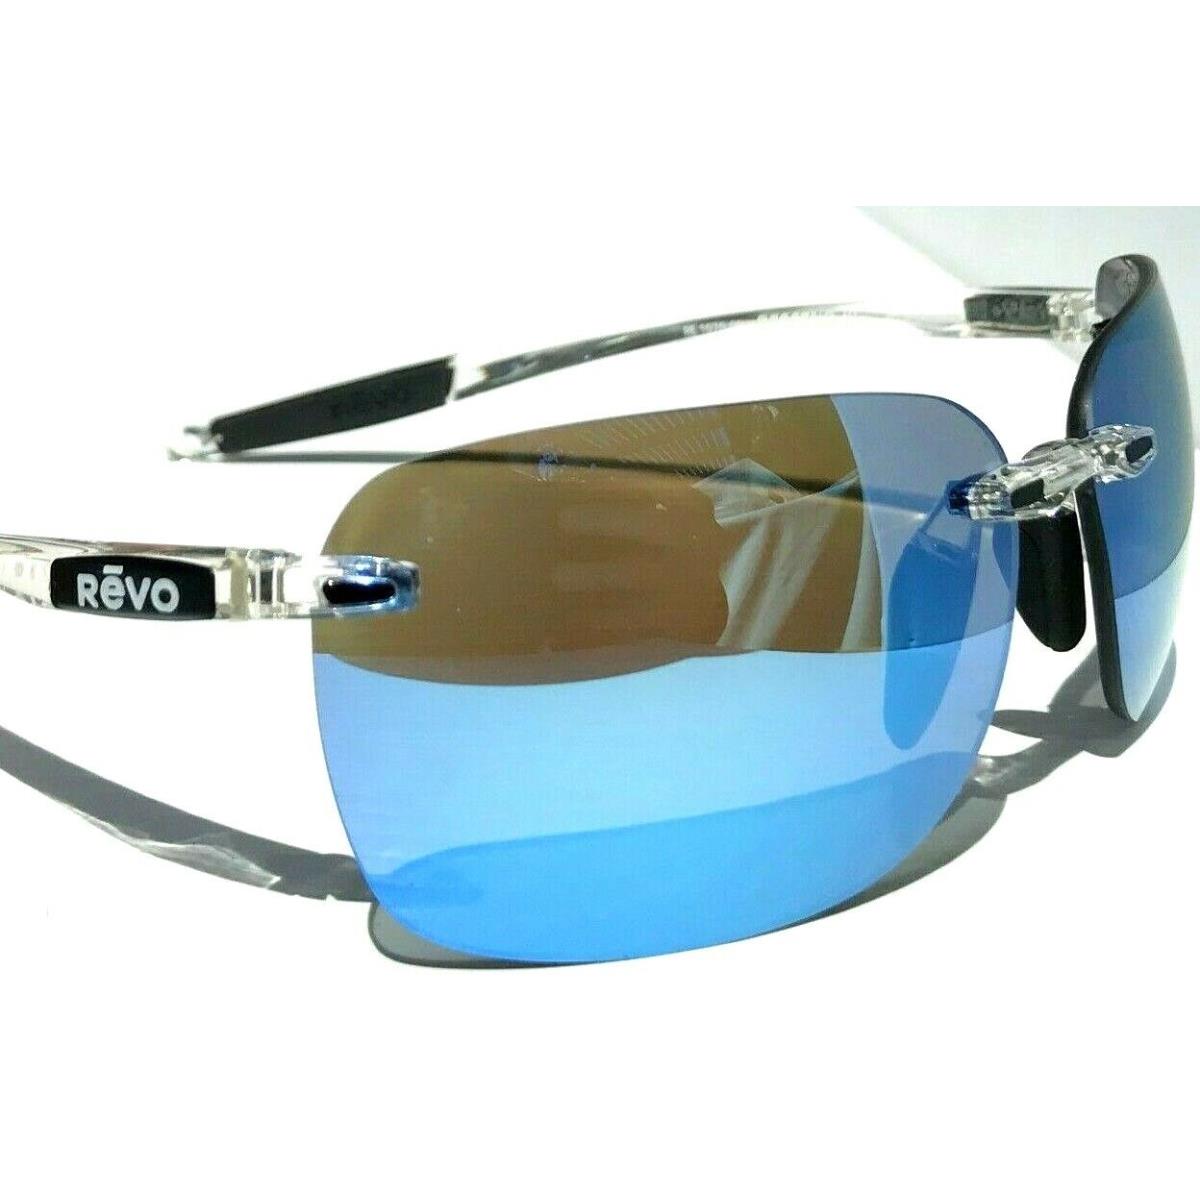 Revo sunglasses Descend - Clear Frame, Blue Coating (Gray View) Polarized Lens